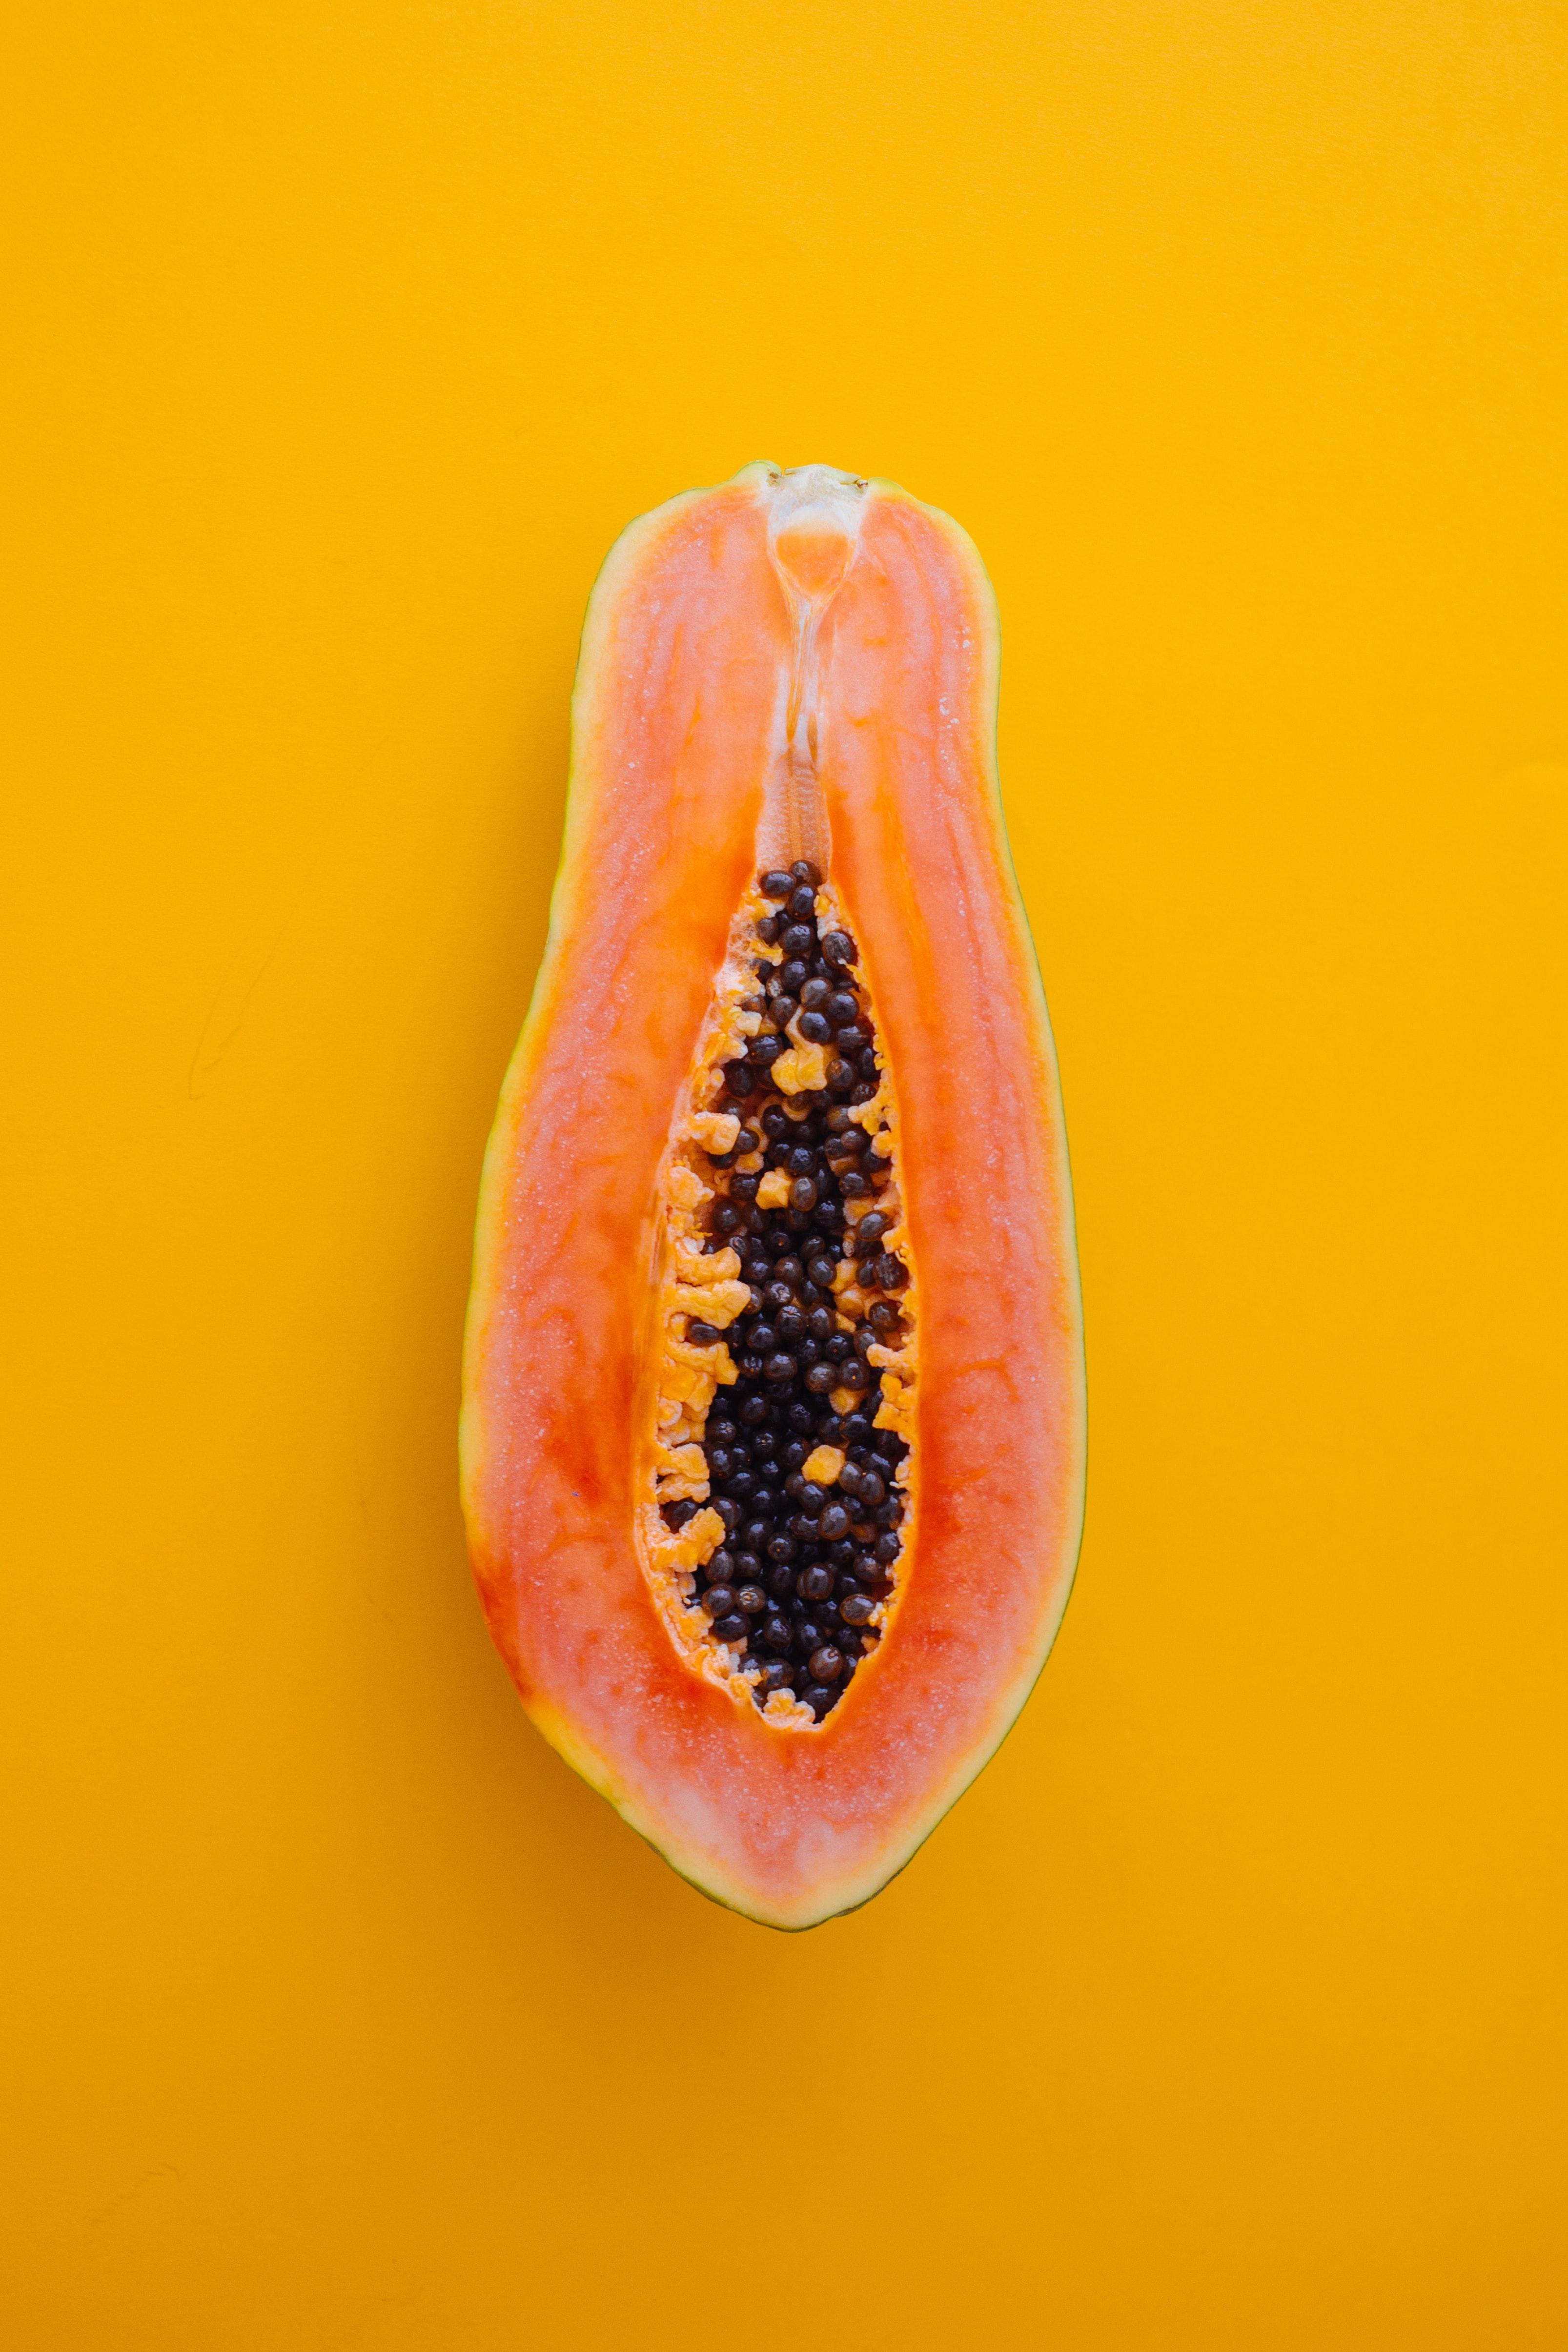 Papaya cut in half exposing black seeds on an orange background.